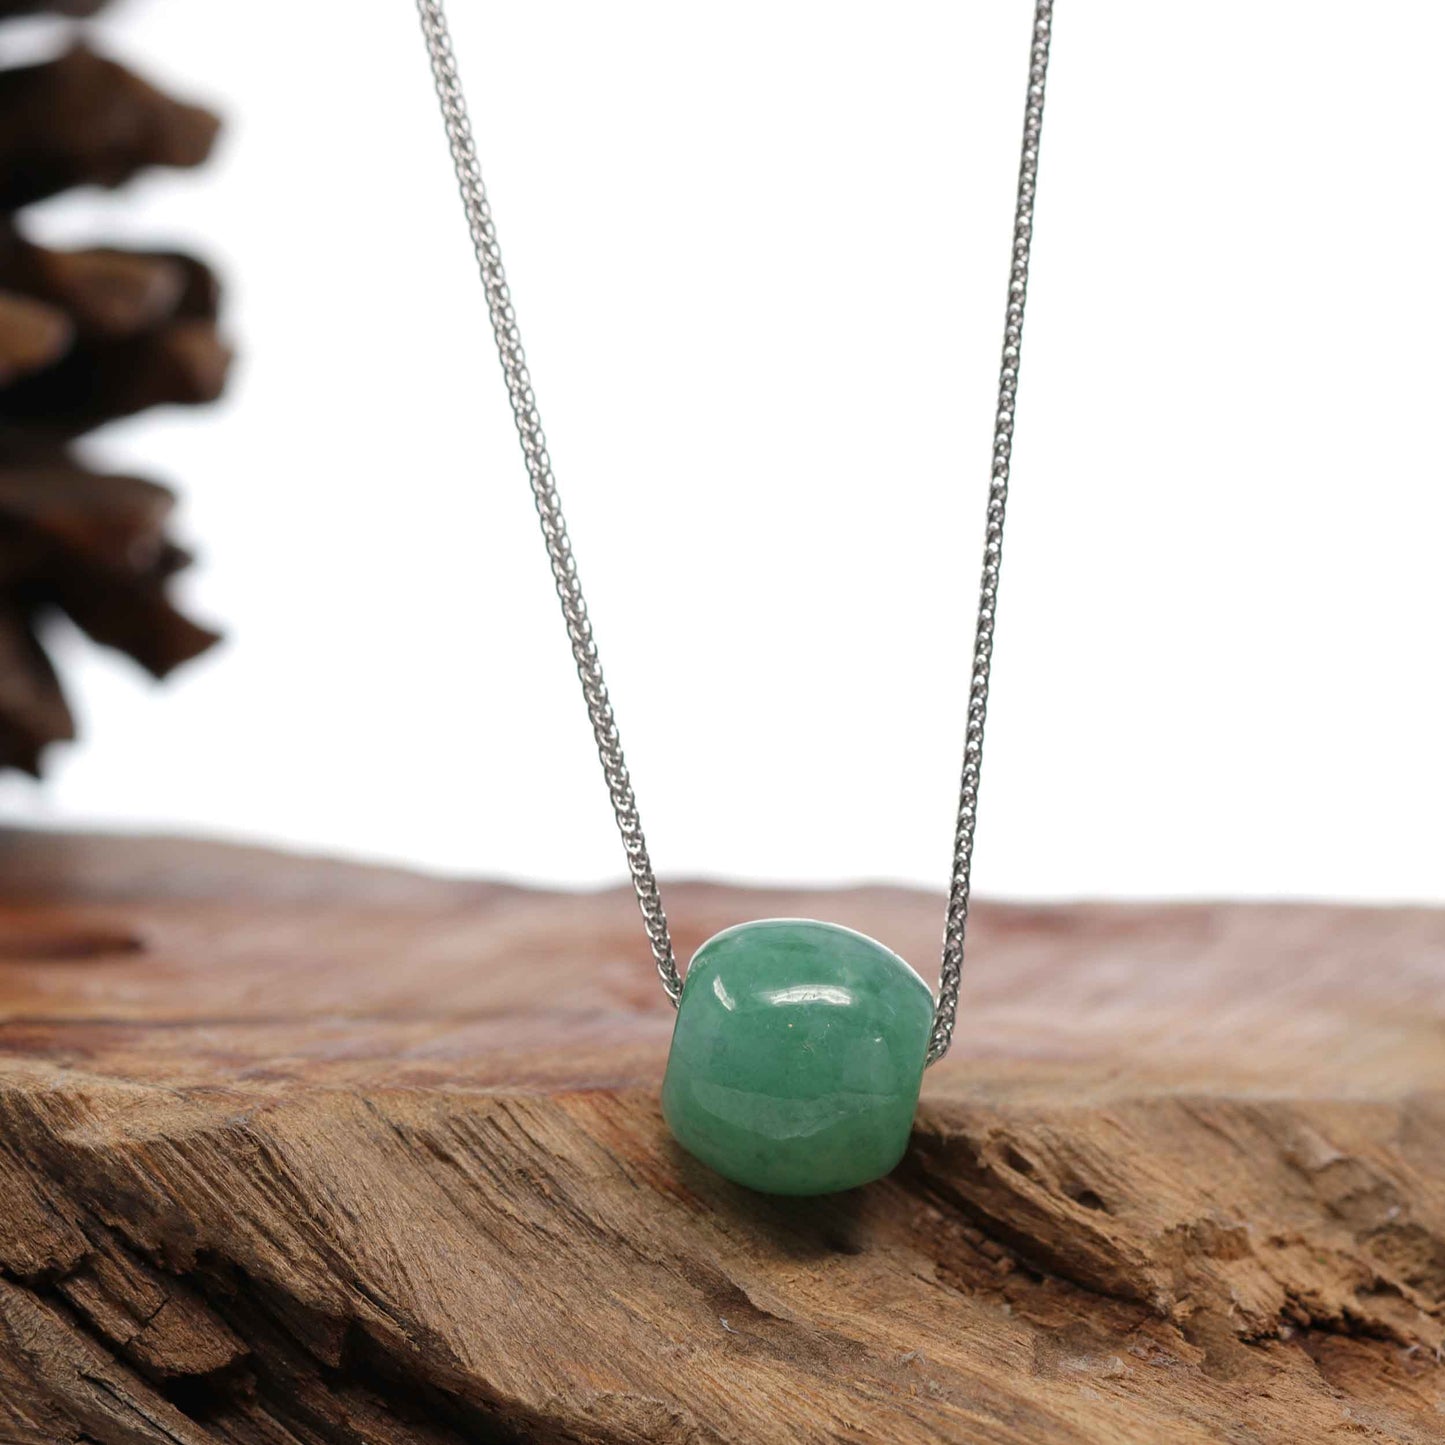 RealJade® Co. "Good Luck Button" Necklace Forest Green Jade Lucky KouKou Pendant Necklace